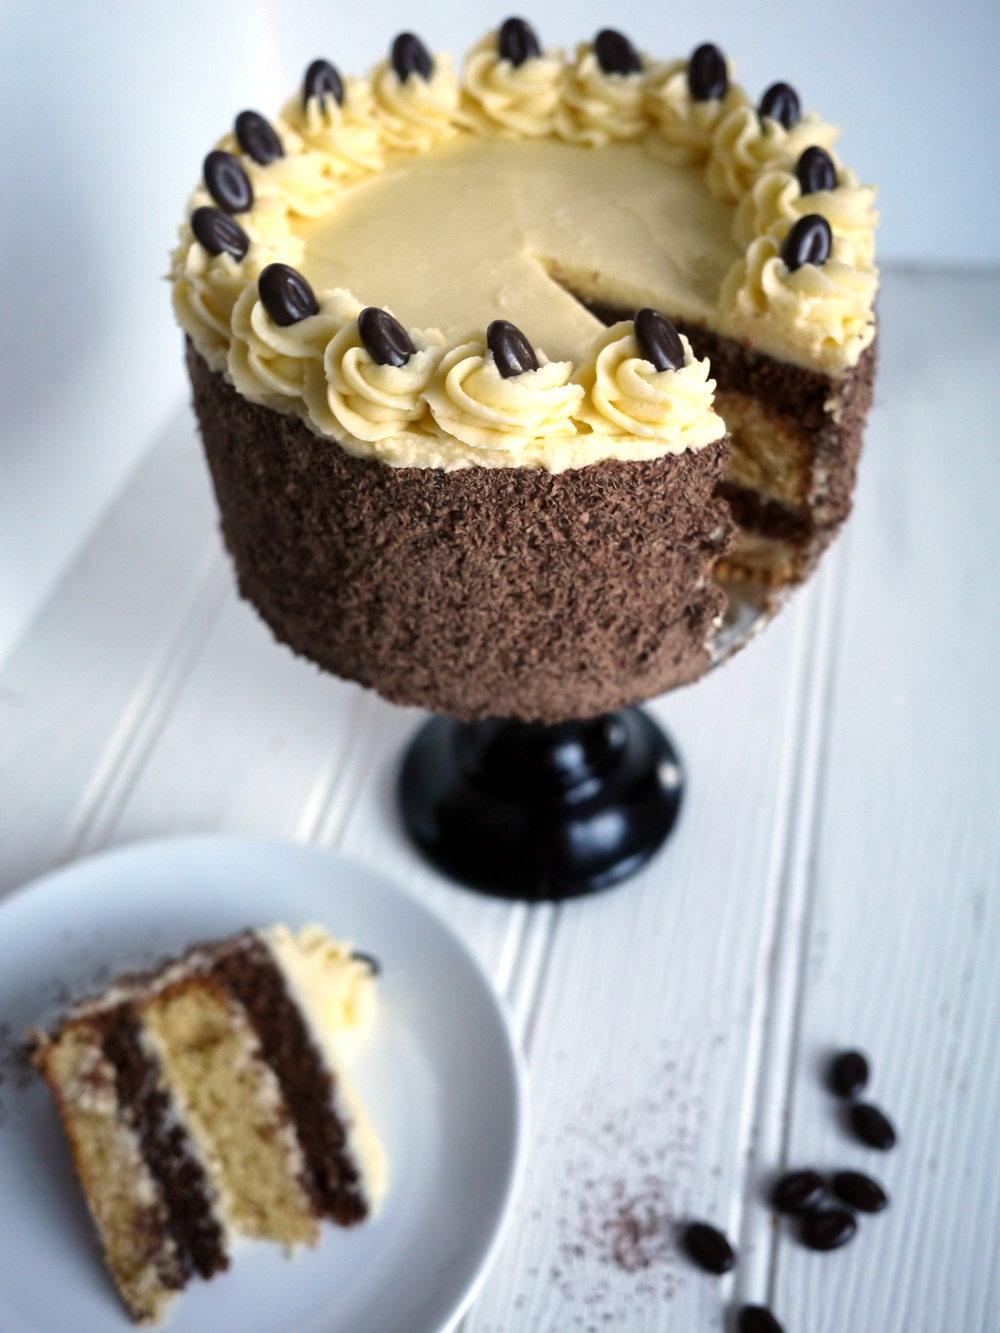 Tiramisu Layer Cake showing a slice of layered coffee and vanilla sponge